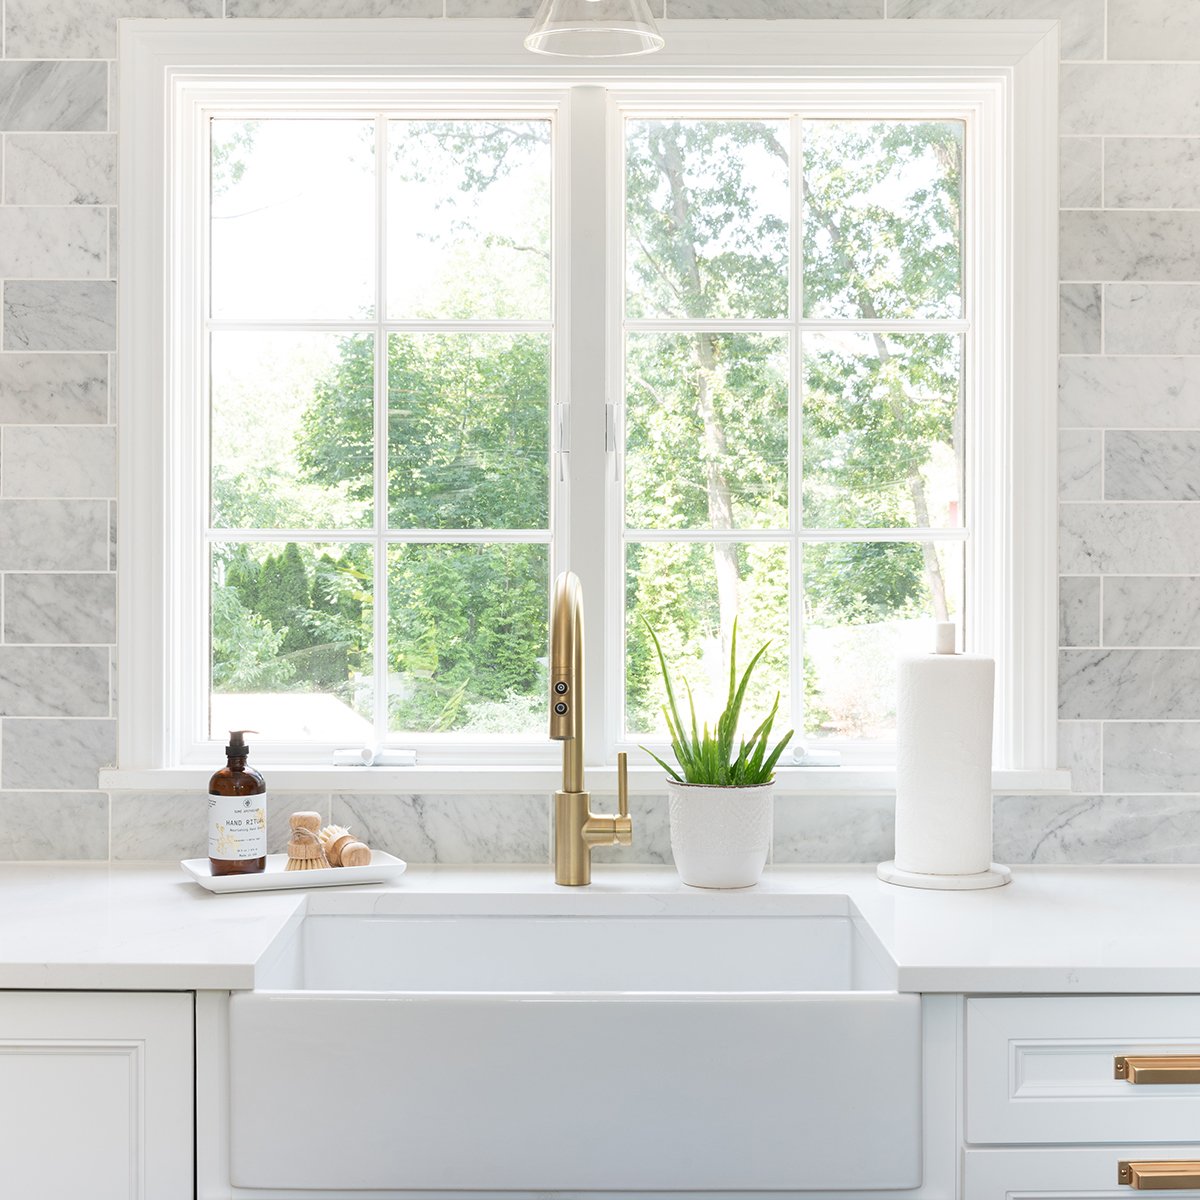 marble kitchen backsplash with farmhouse sink